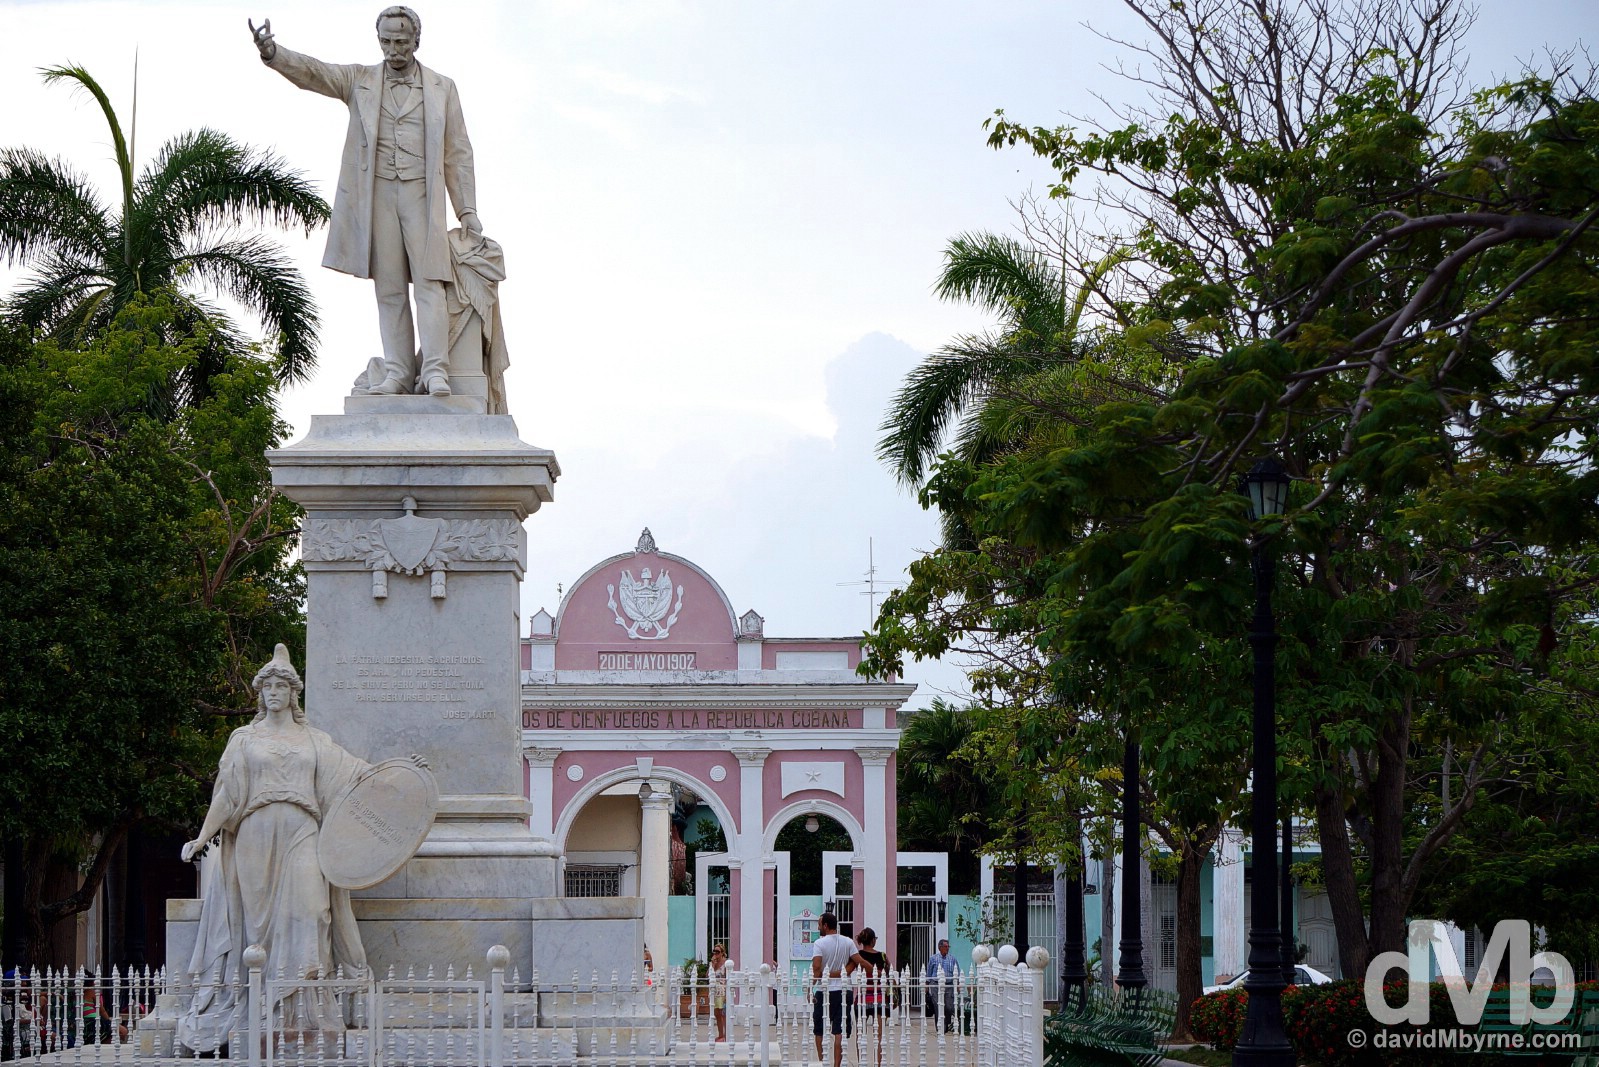 The Jose Marti statue & the Arco de Triunfo, Cuba's only triumphal arch in Parque Jose Marti, Cienfuegos, Cuba. May 7, 2015. 